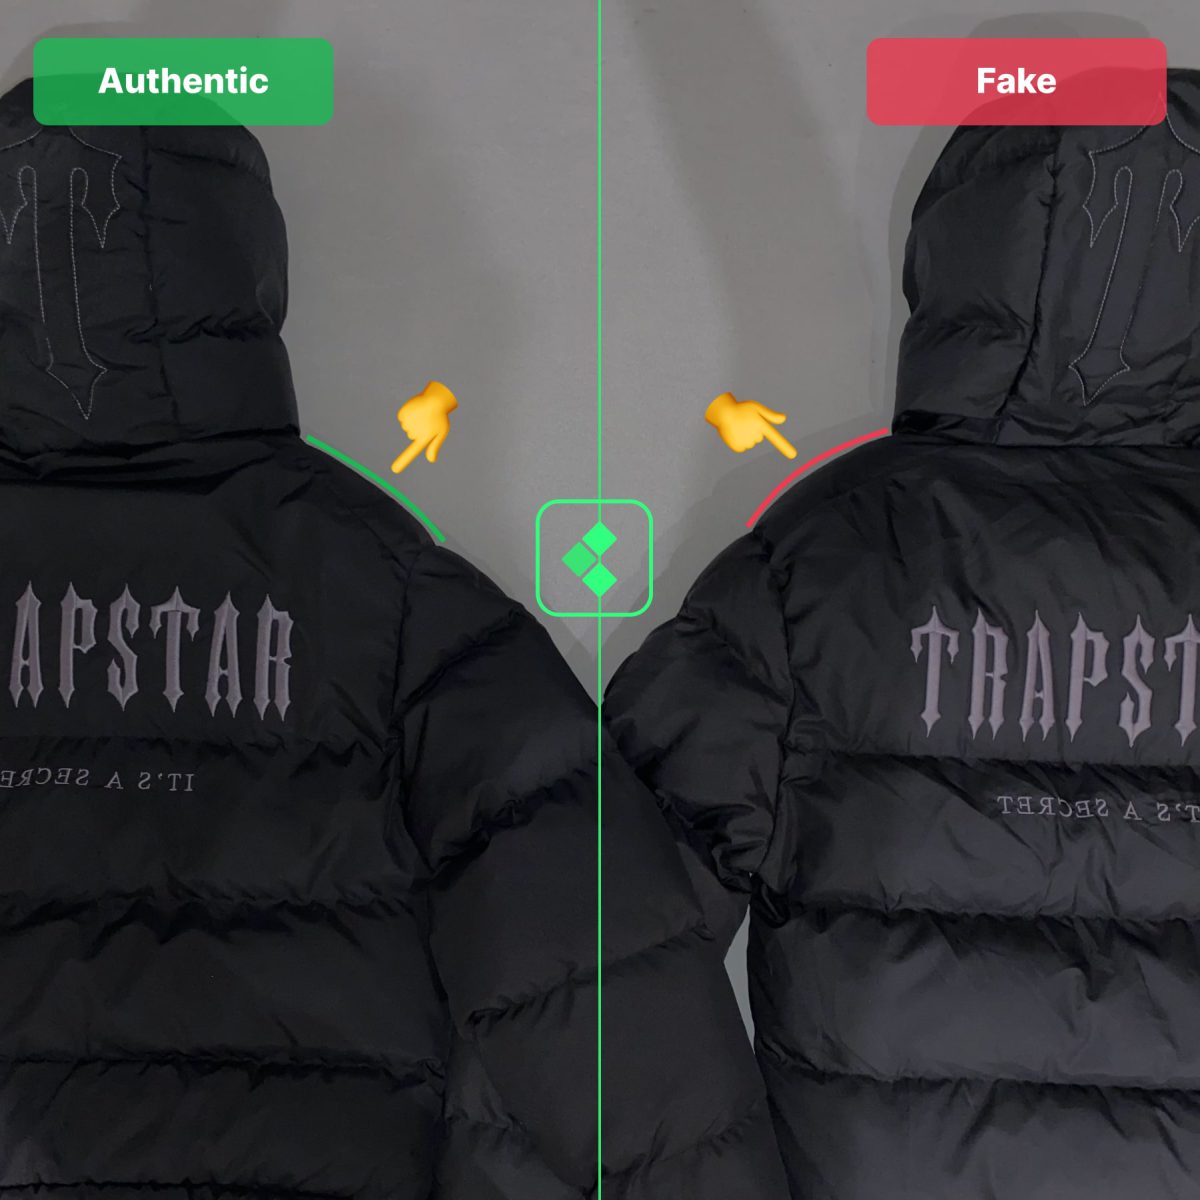 Trapstar Fake Vs Real Shoulders